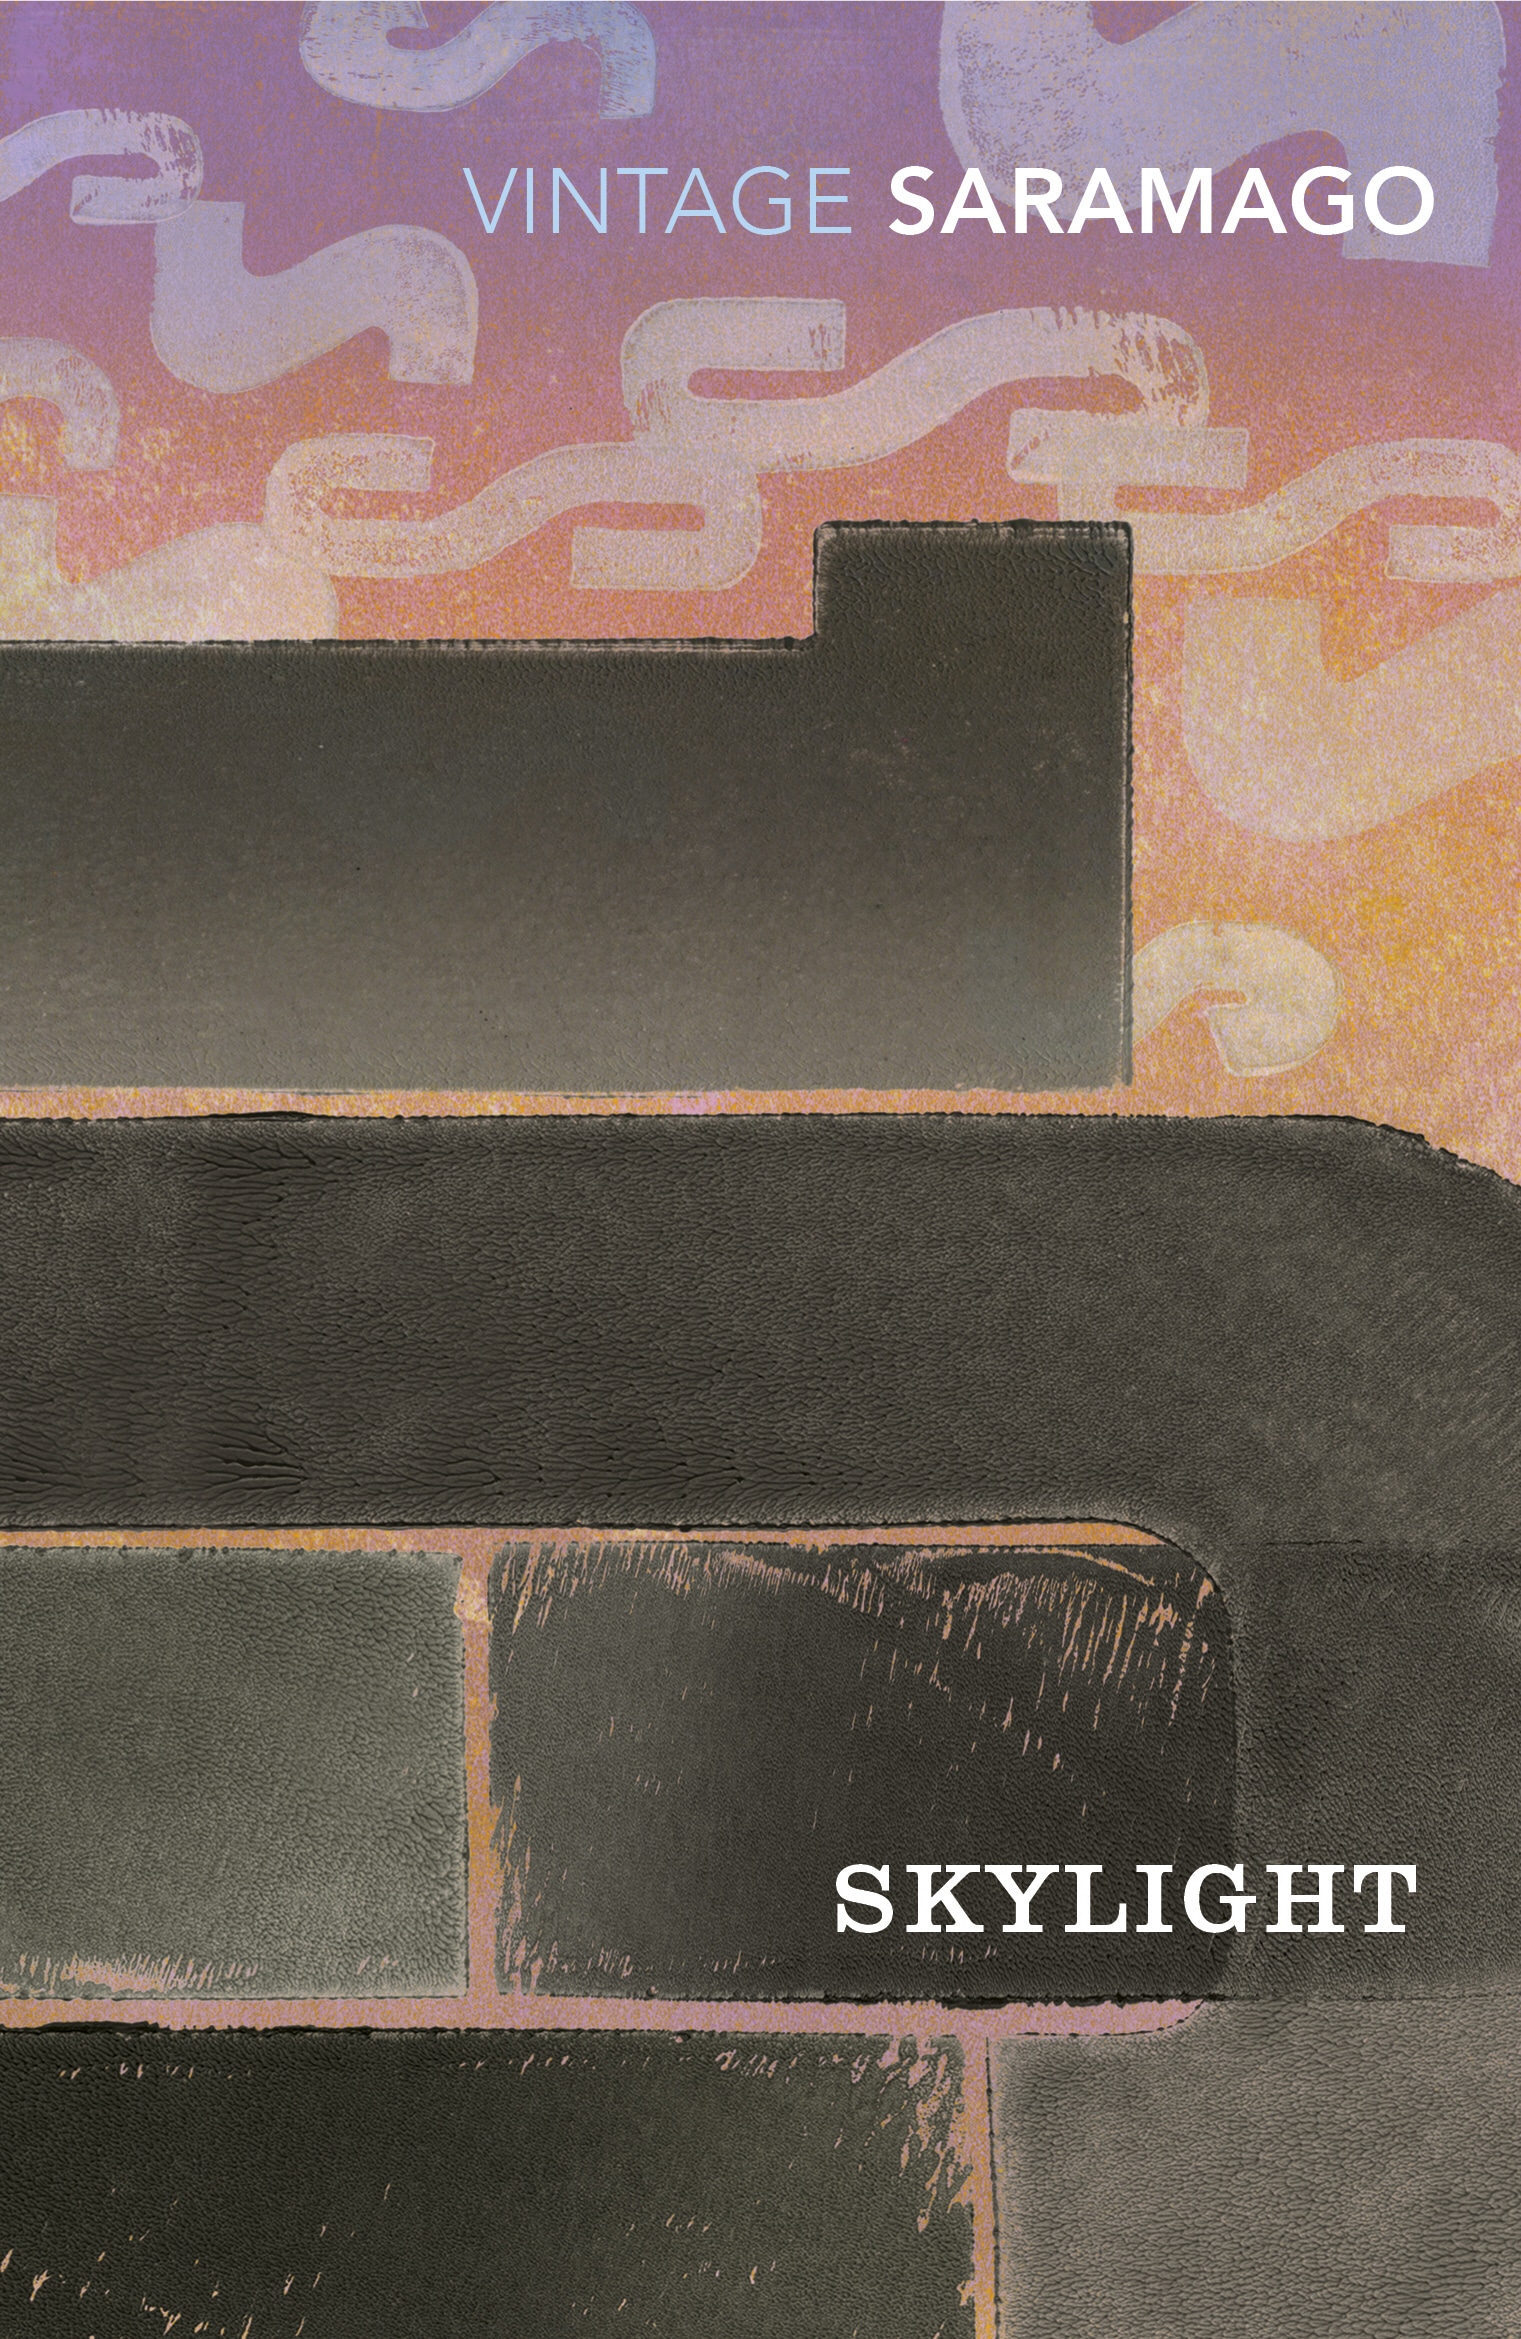 Book “Skylight” by José Saramago — December 5, 2019